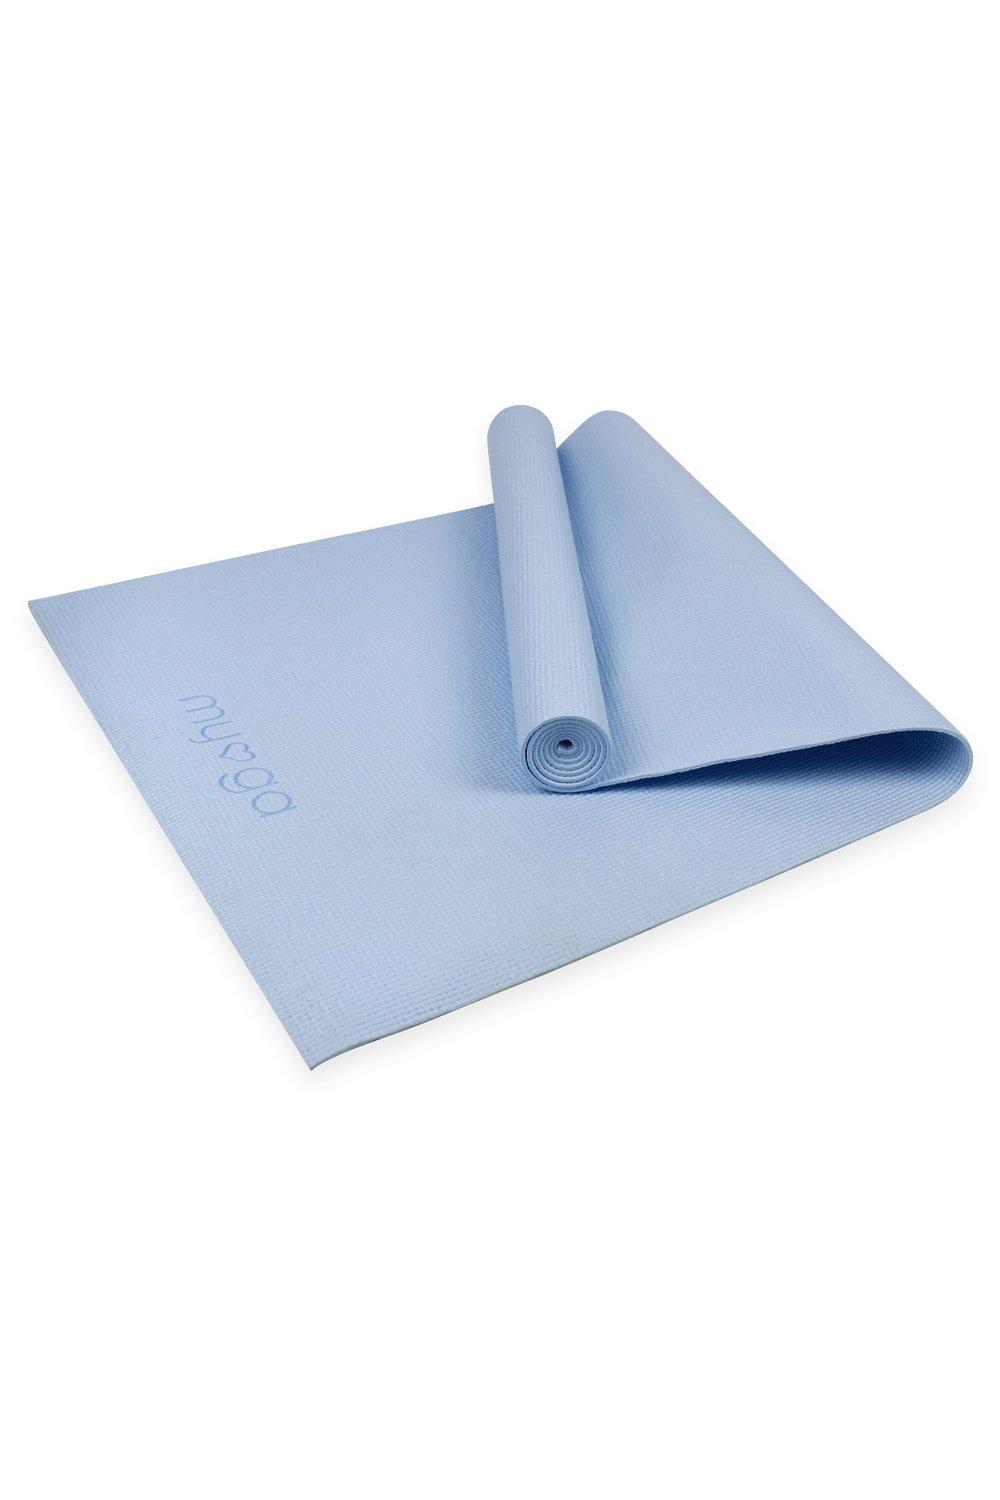 Sports Equipment, Entry Level Yoga Mat - Sky Blue